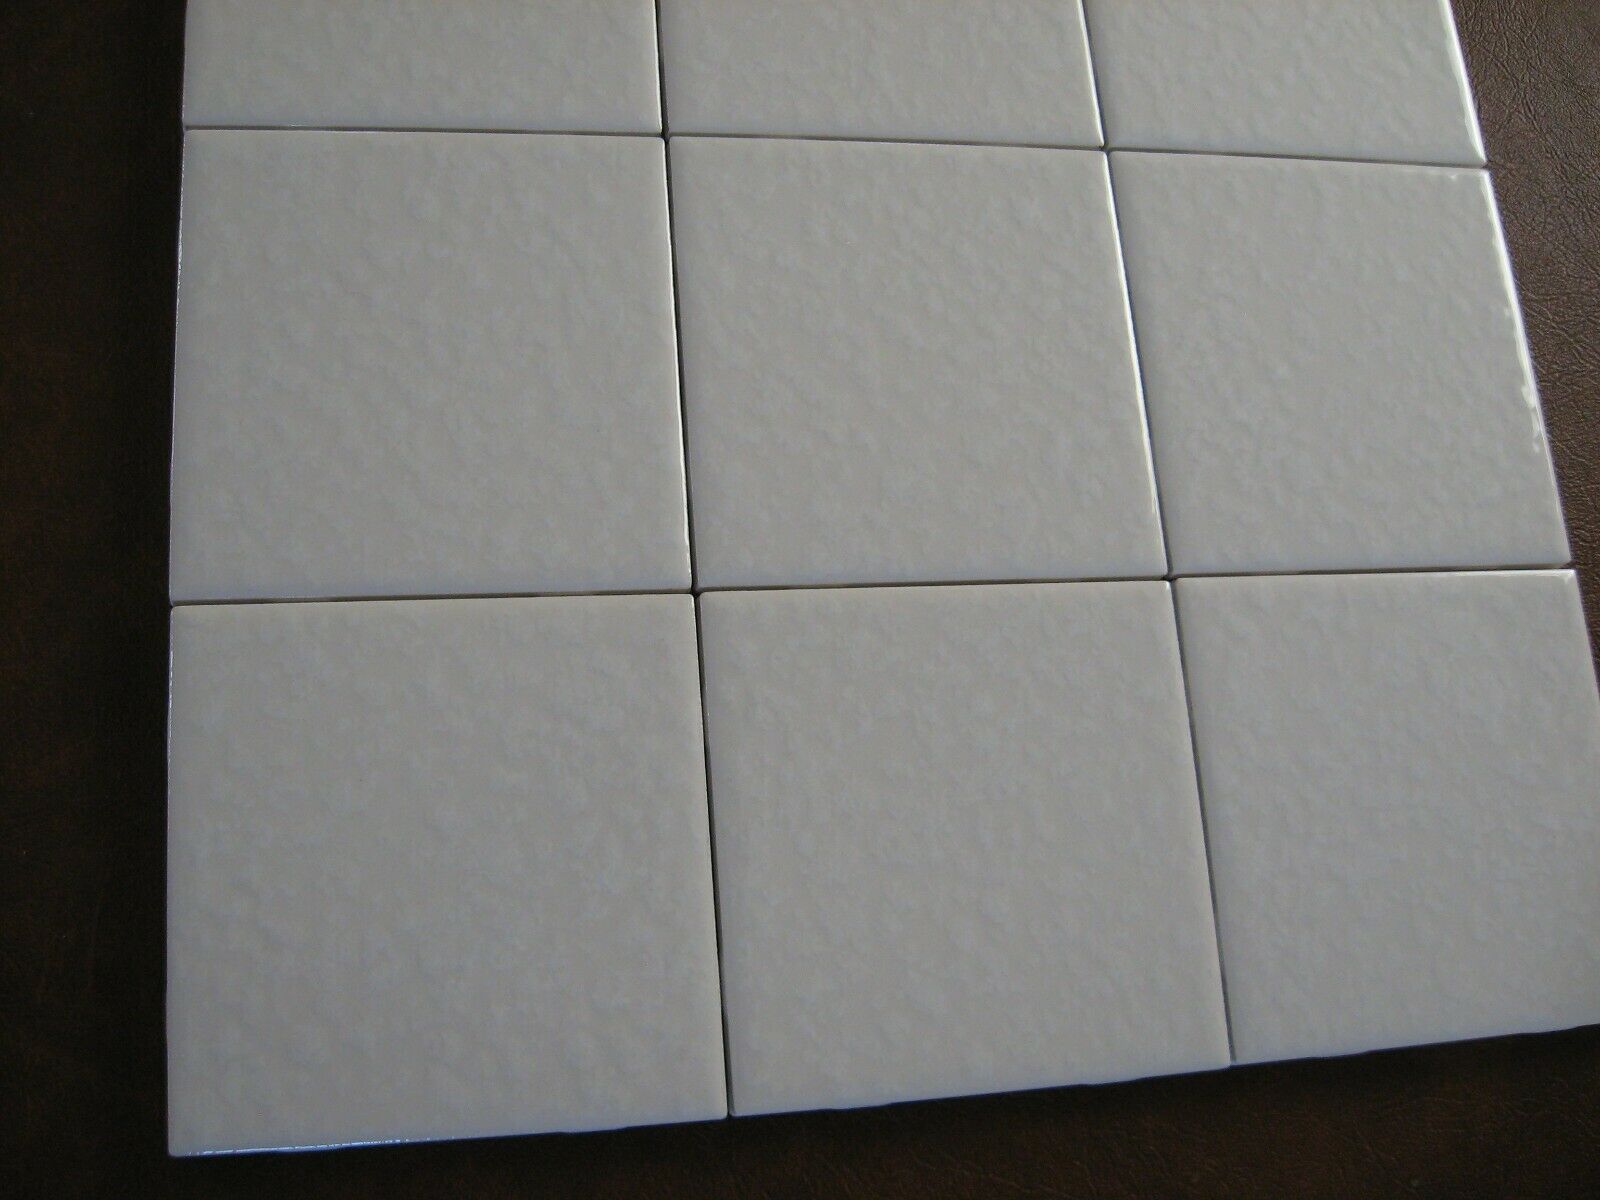 Unused Dal Tile Mayan White On White Field Tile 4-1/4 X 4-1/4 Bumpy Splatter